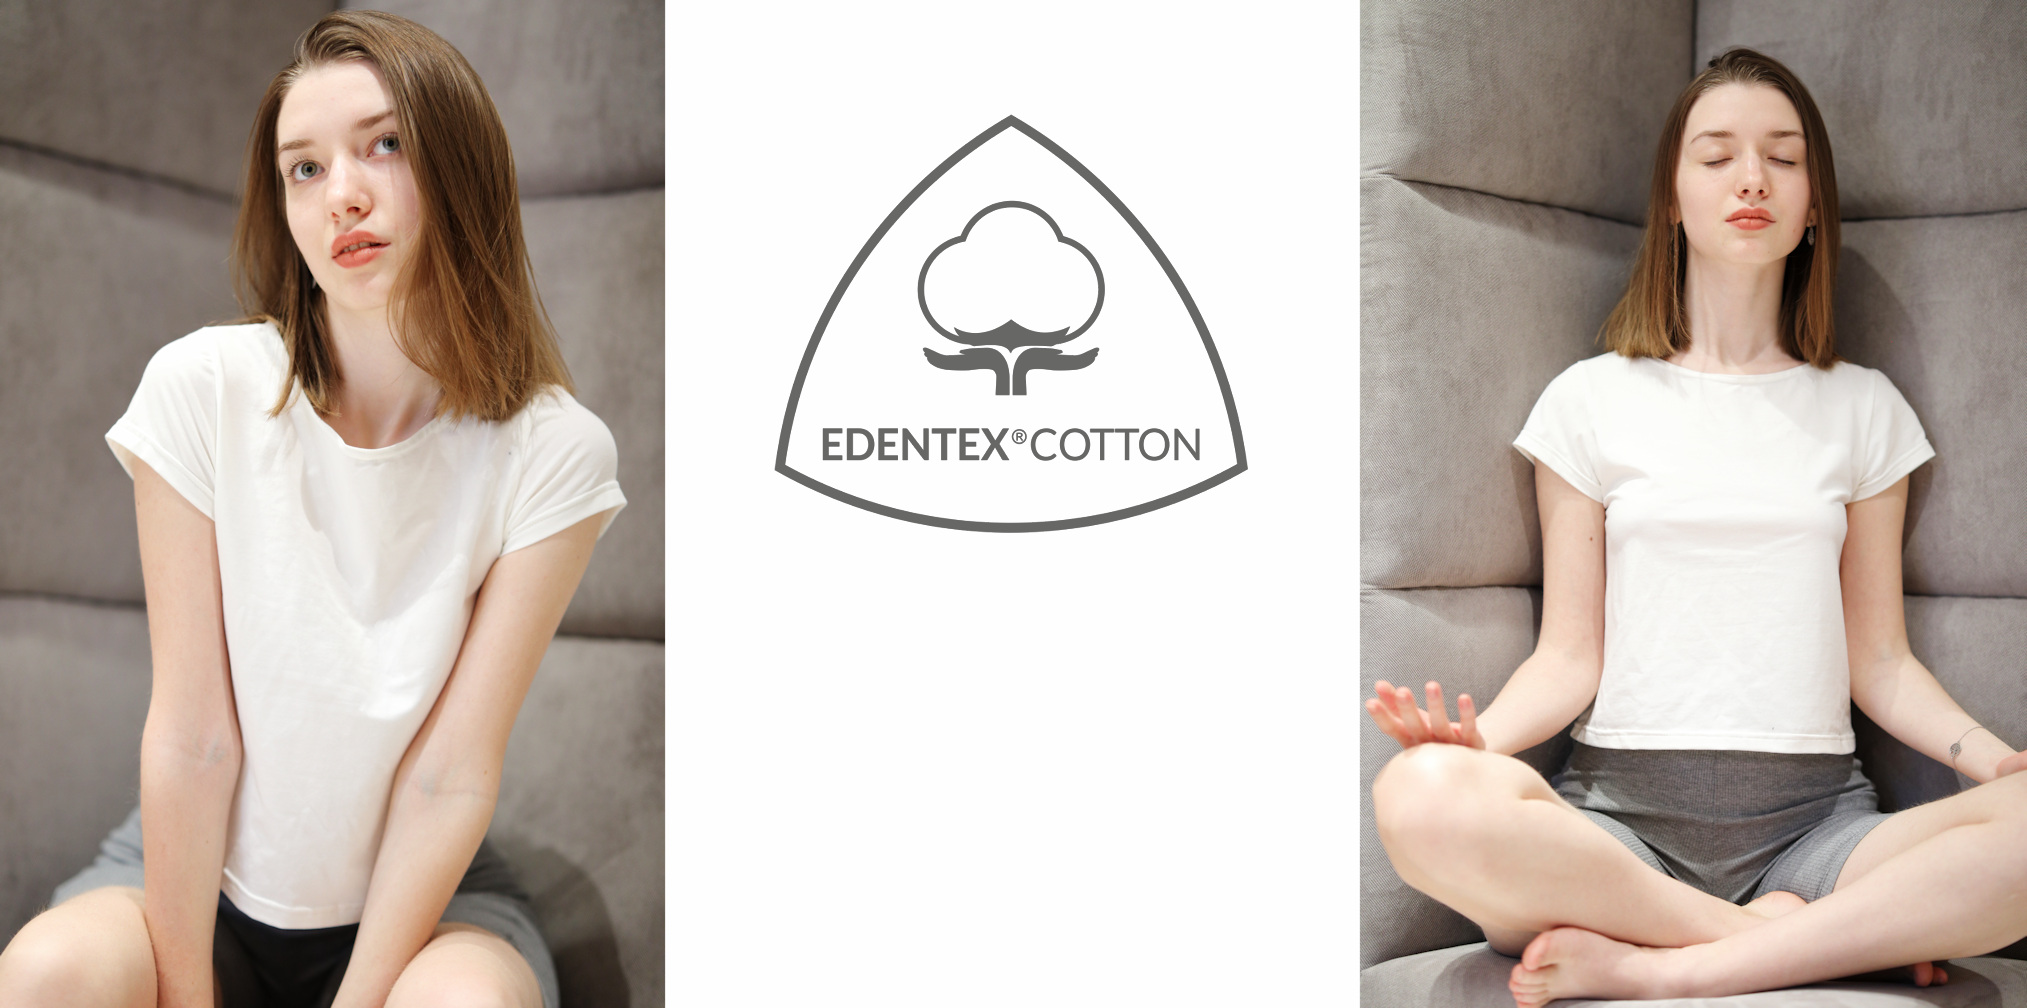 EDENTEX®COTTON yarn is used for all EDENTEX® cotton jersey fabrics